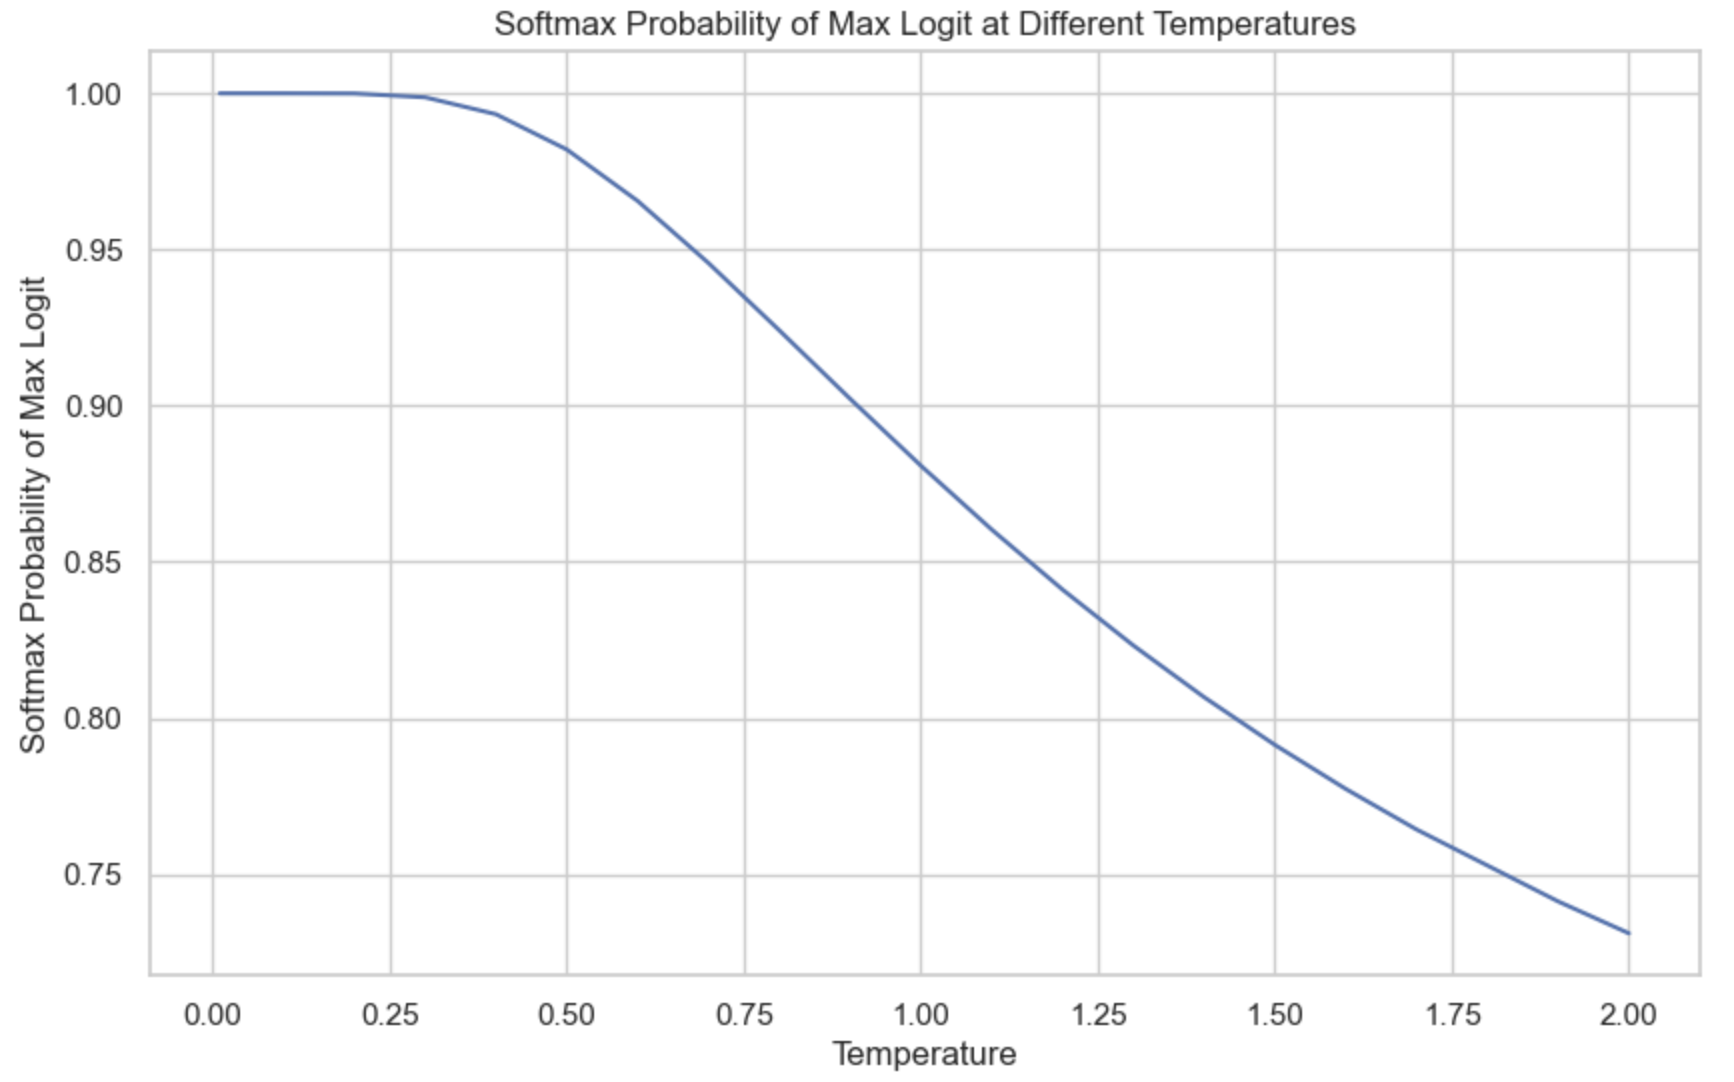 Sampling the next token based on token probabilities using temperature